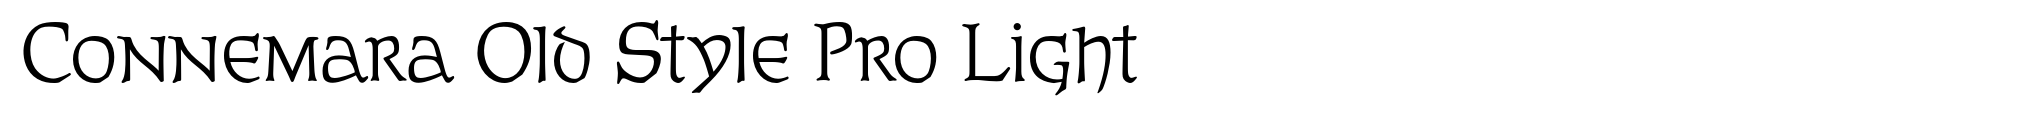 Connemara Old Style Pro Light image